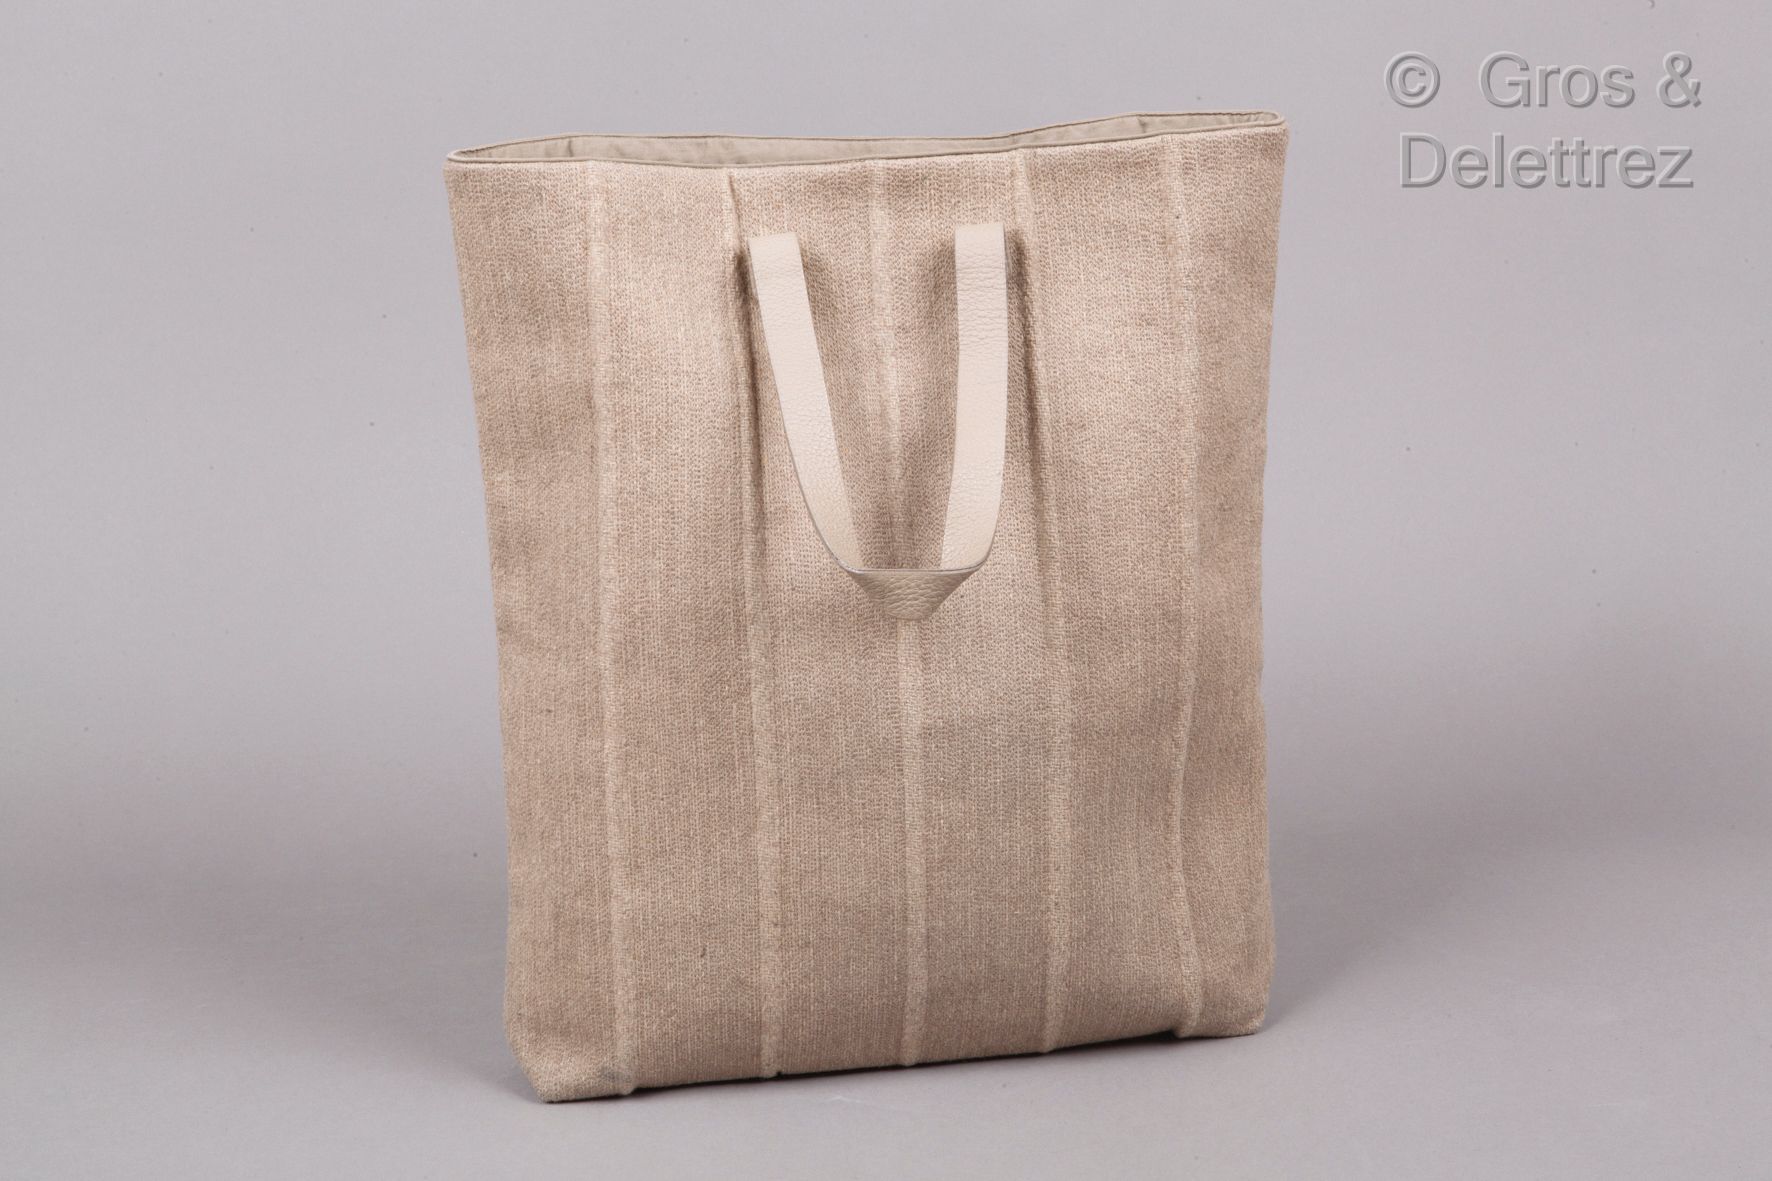 HERMES Paris made in India Bag 36 cm in woolen canvas sand, double handles in gr&hellip;